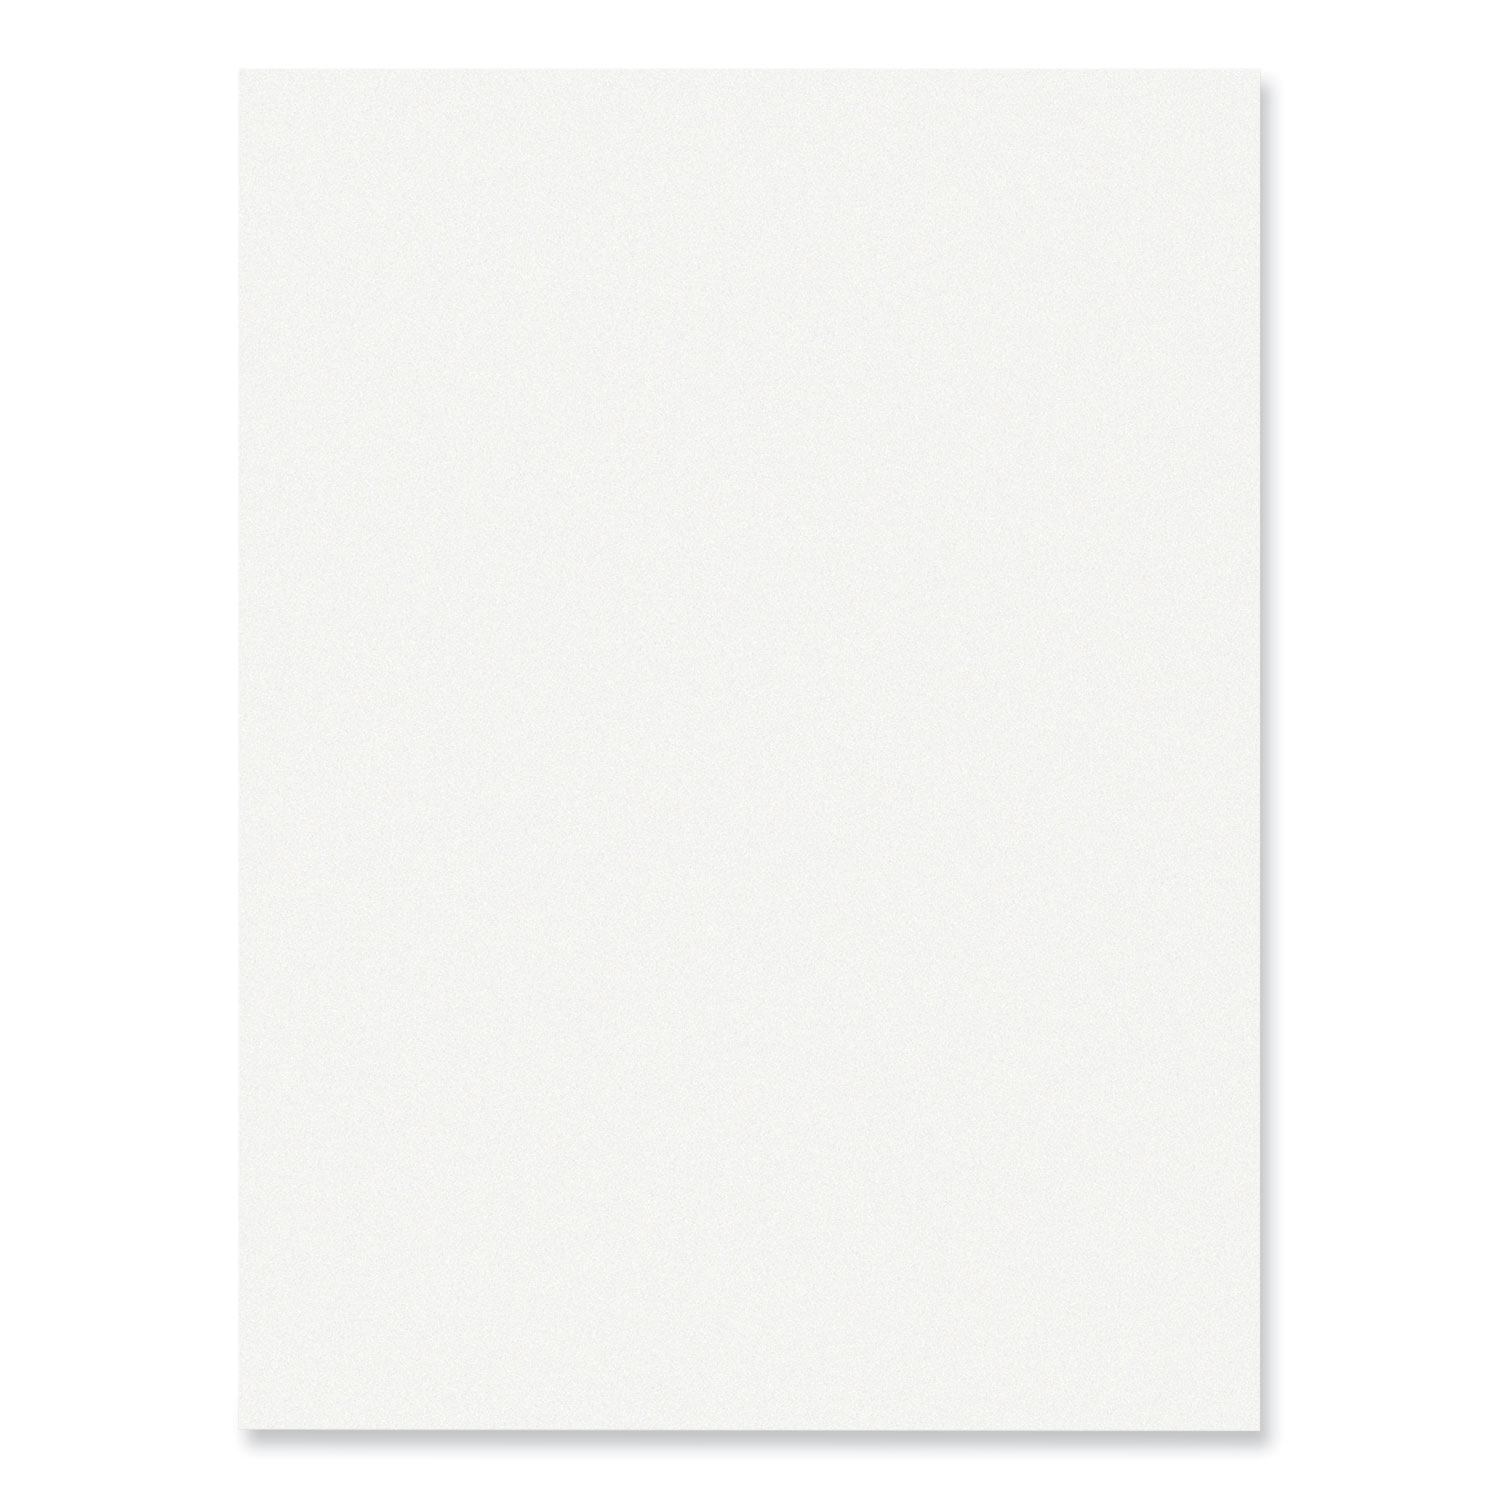 SunWorks Construction Paper, 58lb, 18 x 24, Bright White, 50/Pack